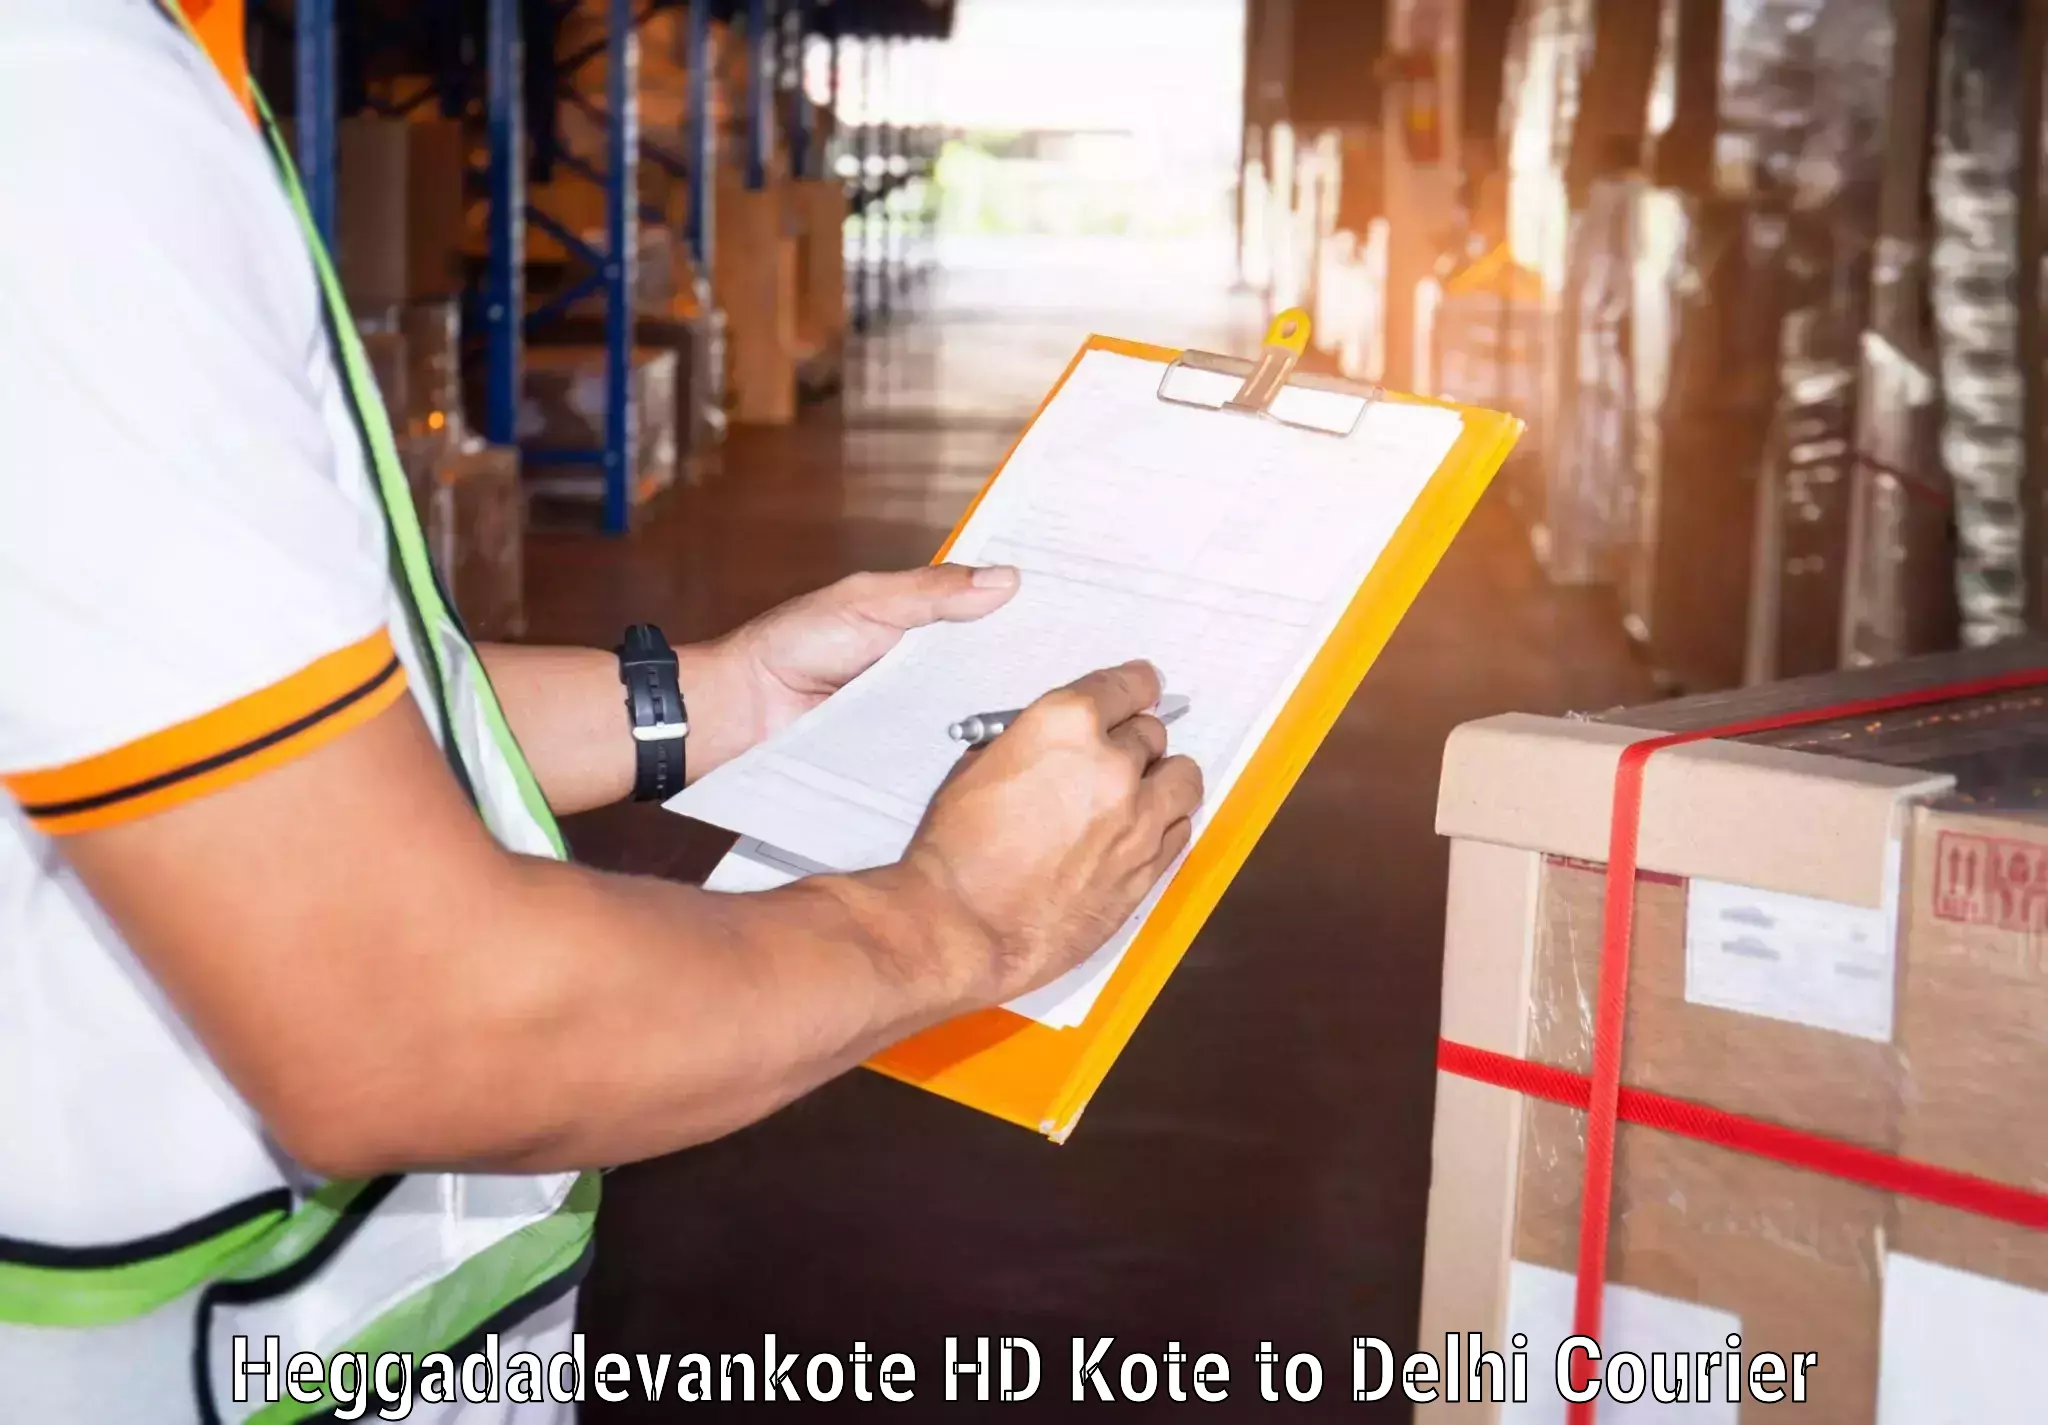 Express delivery solutions Heggadadevankote HD Kote to Sansad Marg